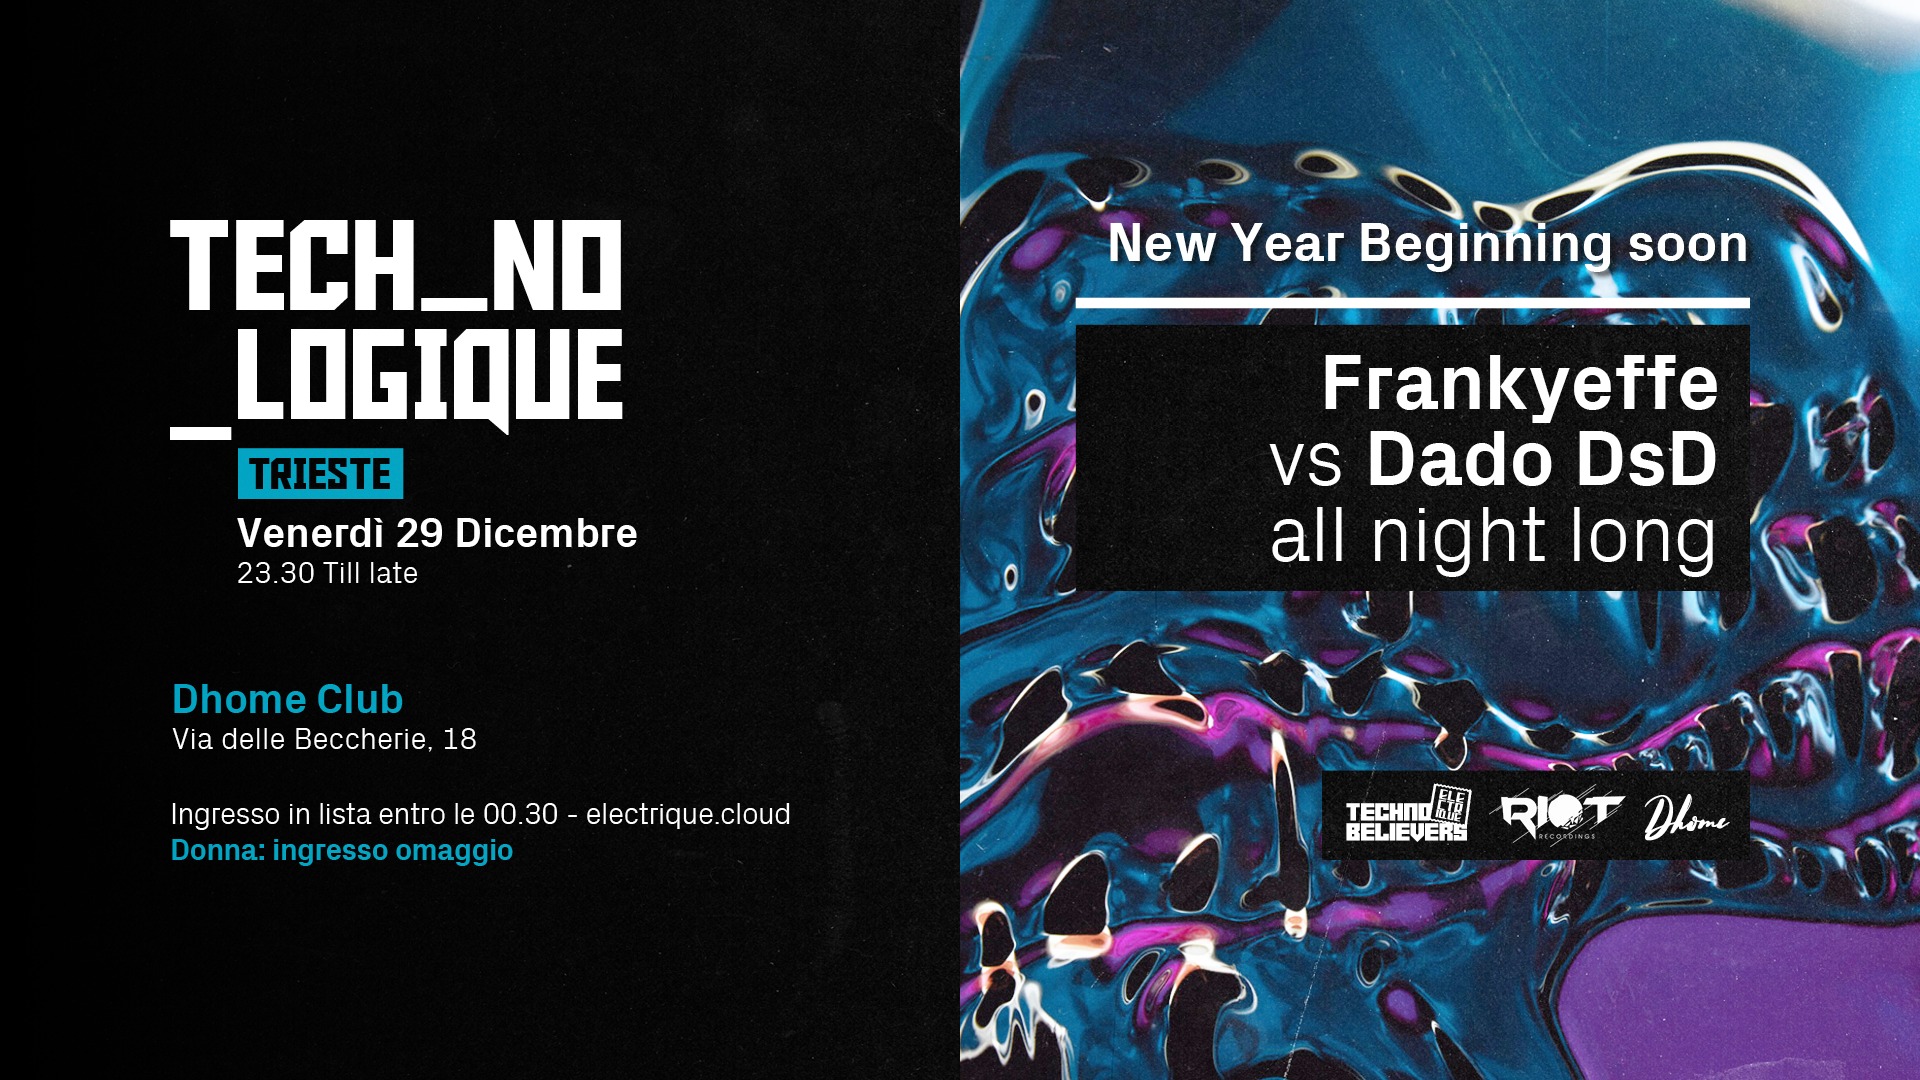 TECH_NO_LOGIQUE Trieste 💥 New Year Beginning Soon w/ FRANKYEFFE - EventiFVG.it